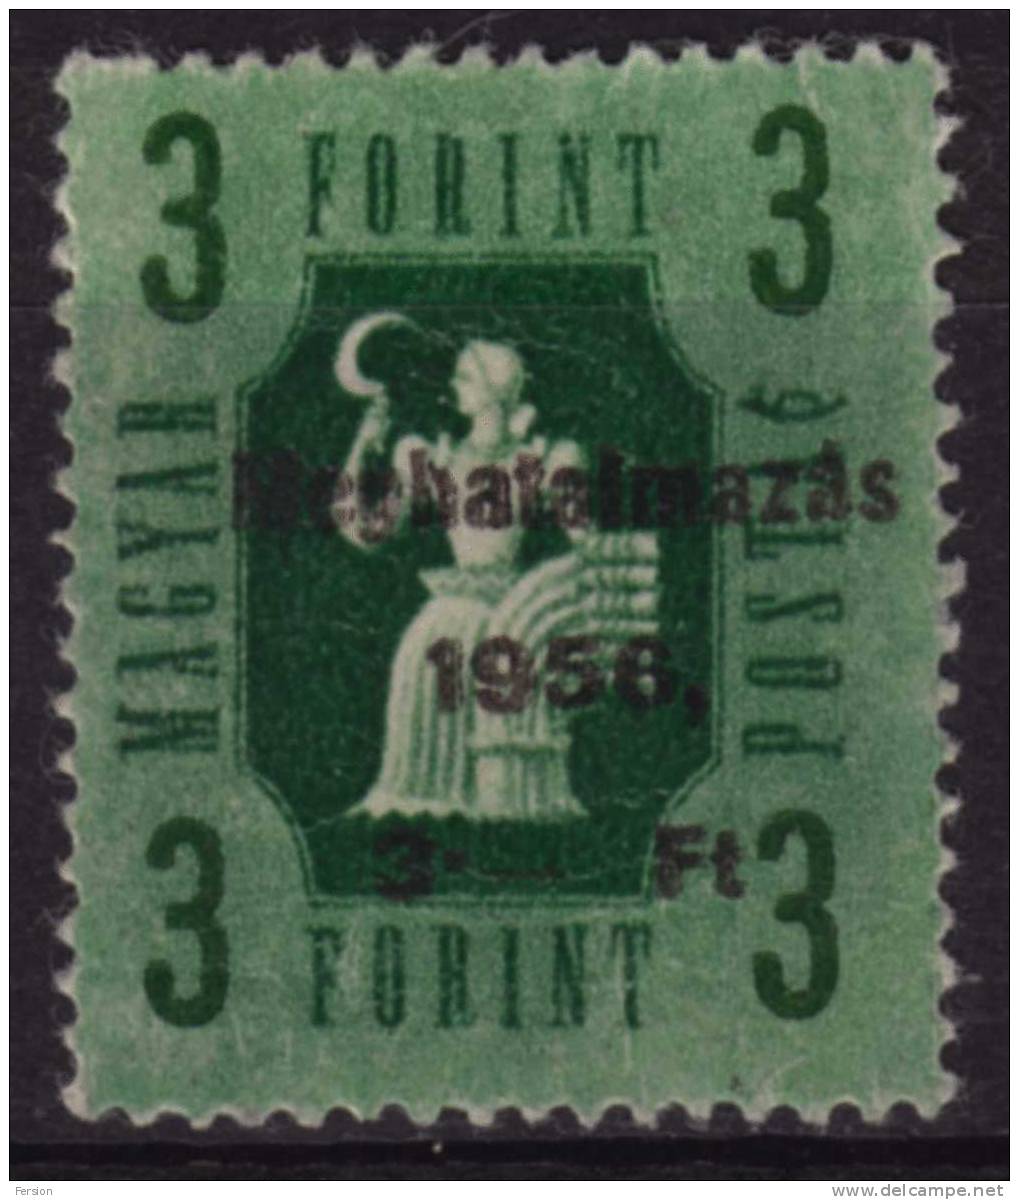 Hungary Ungarn - 1956 - Authorization Stamp - Revenue Stamps